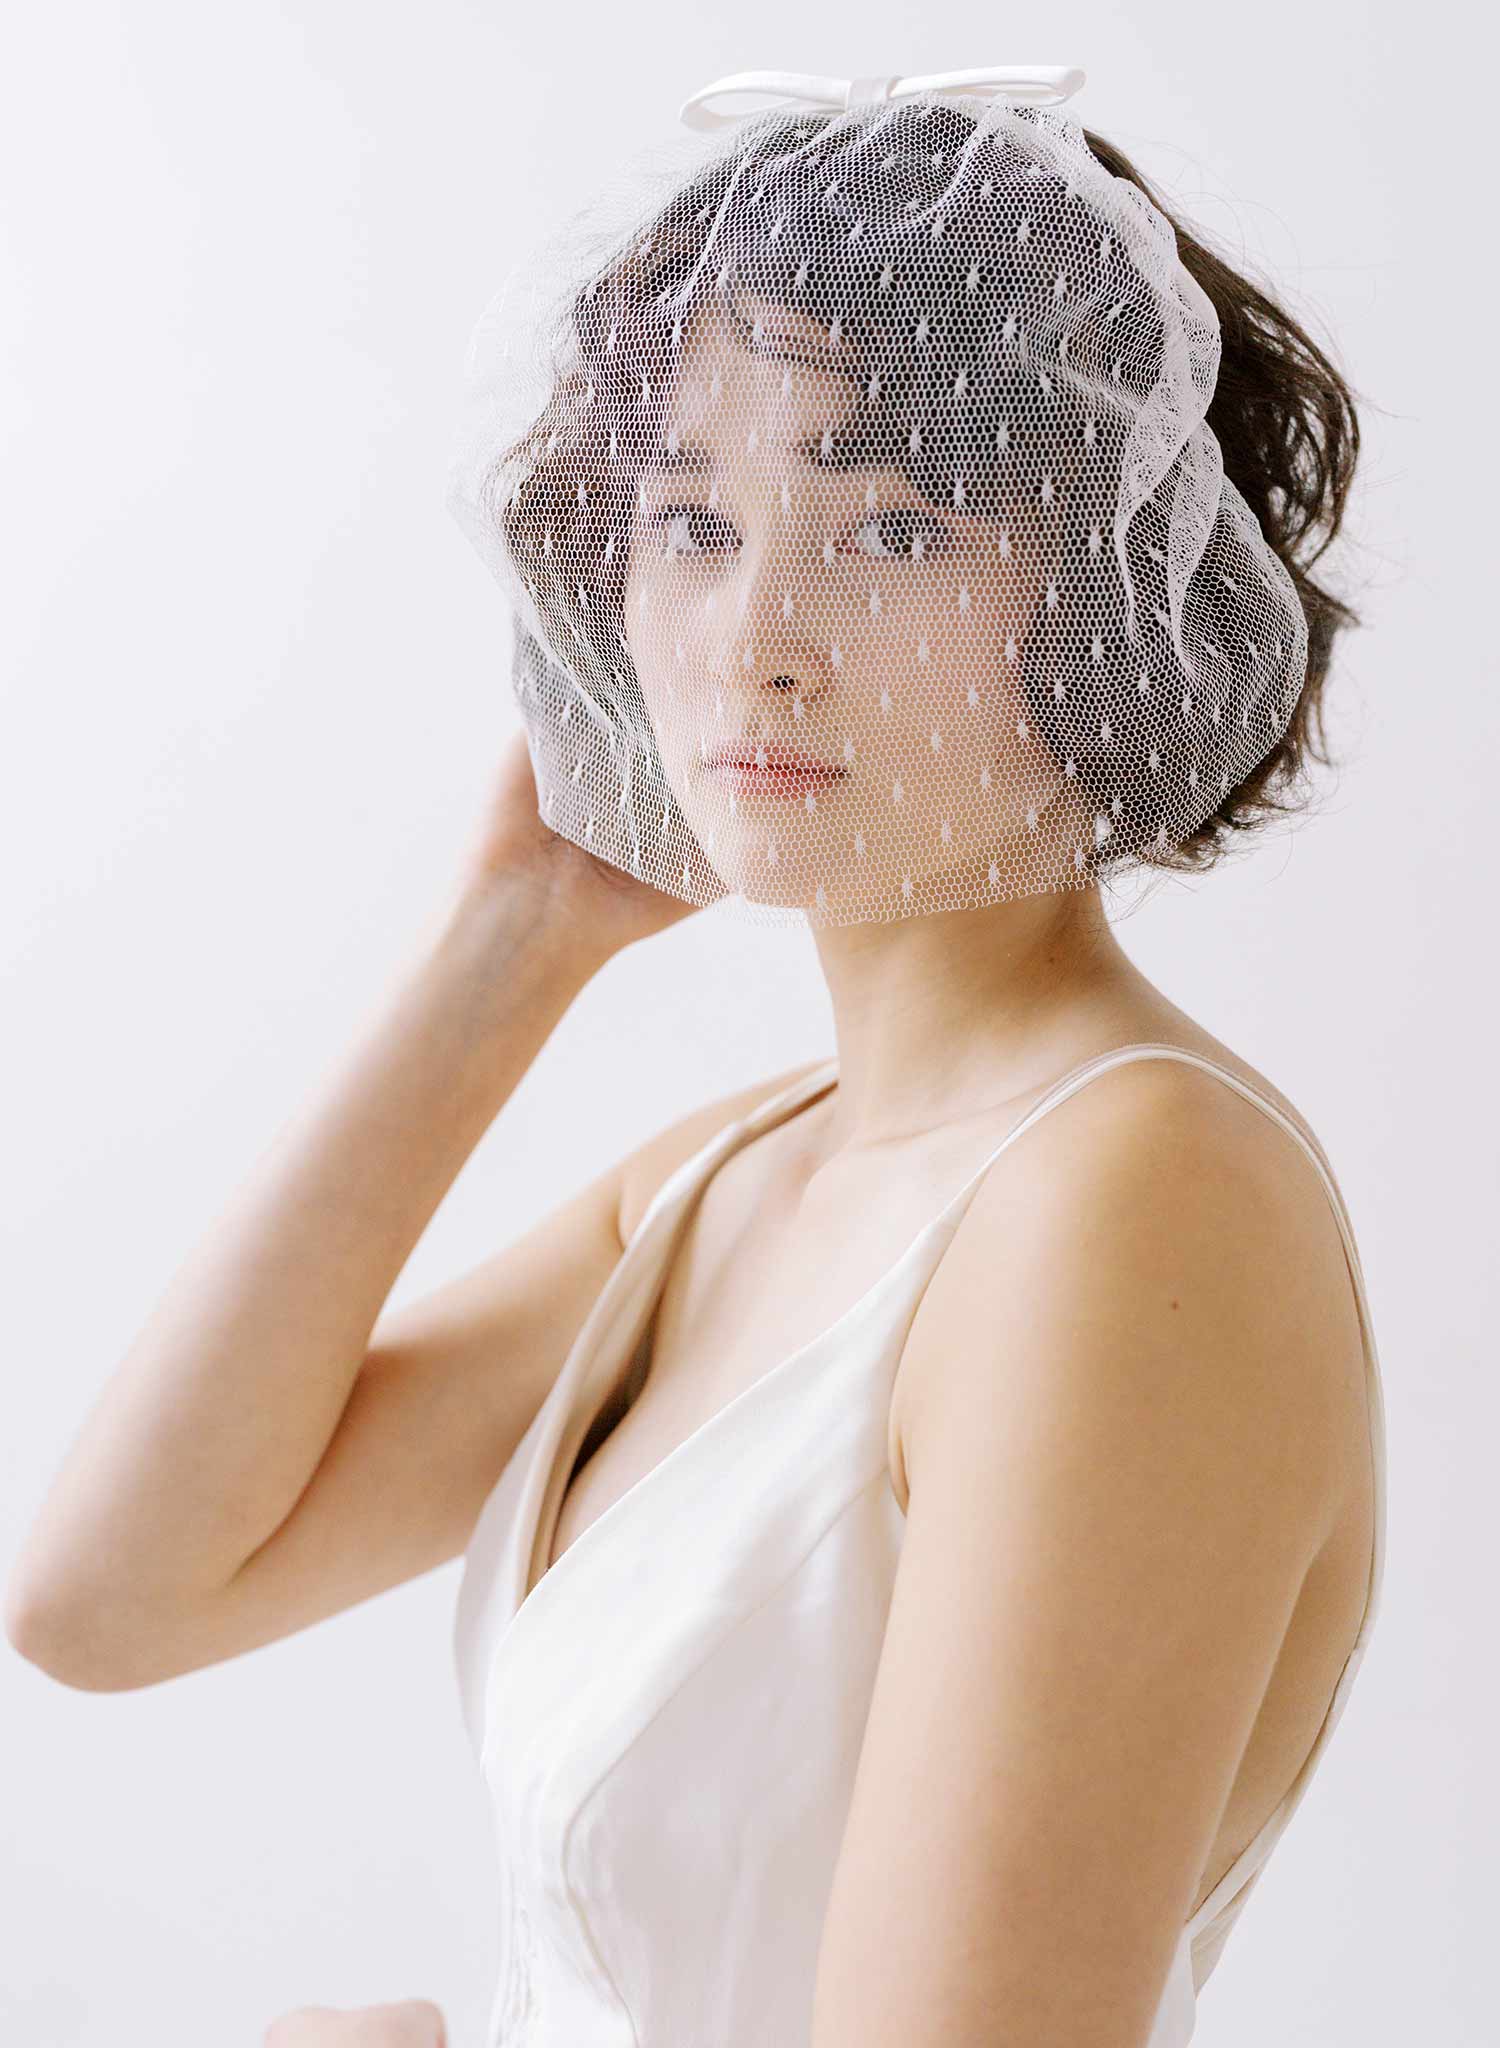 Twigs & Honey Crystal Bridal Birdcage Veil Headband - Ultra Luxe Crystal Bridal Birdcage Headband Veil - Style #2349 White